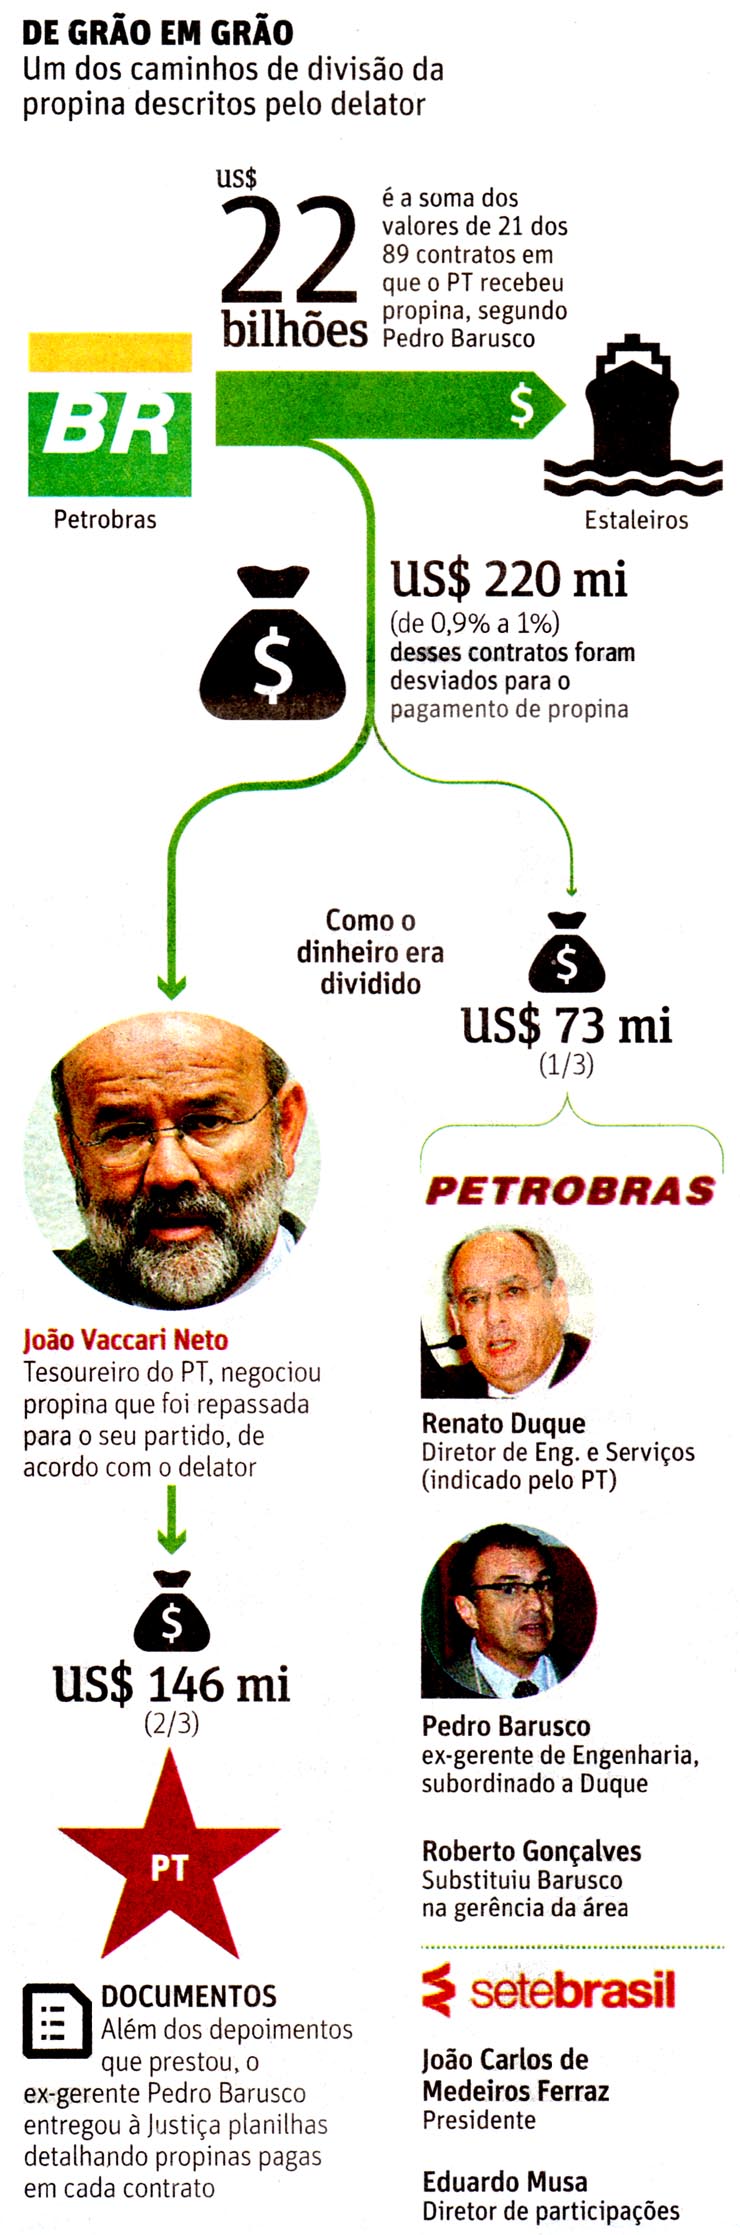 Folha de So Paulo - 06/02/2015 - PETROLO: PT recebeu at US$ 200 milhes